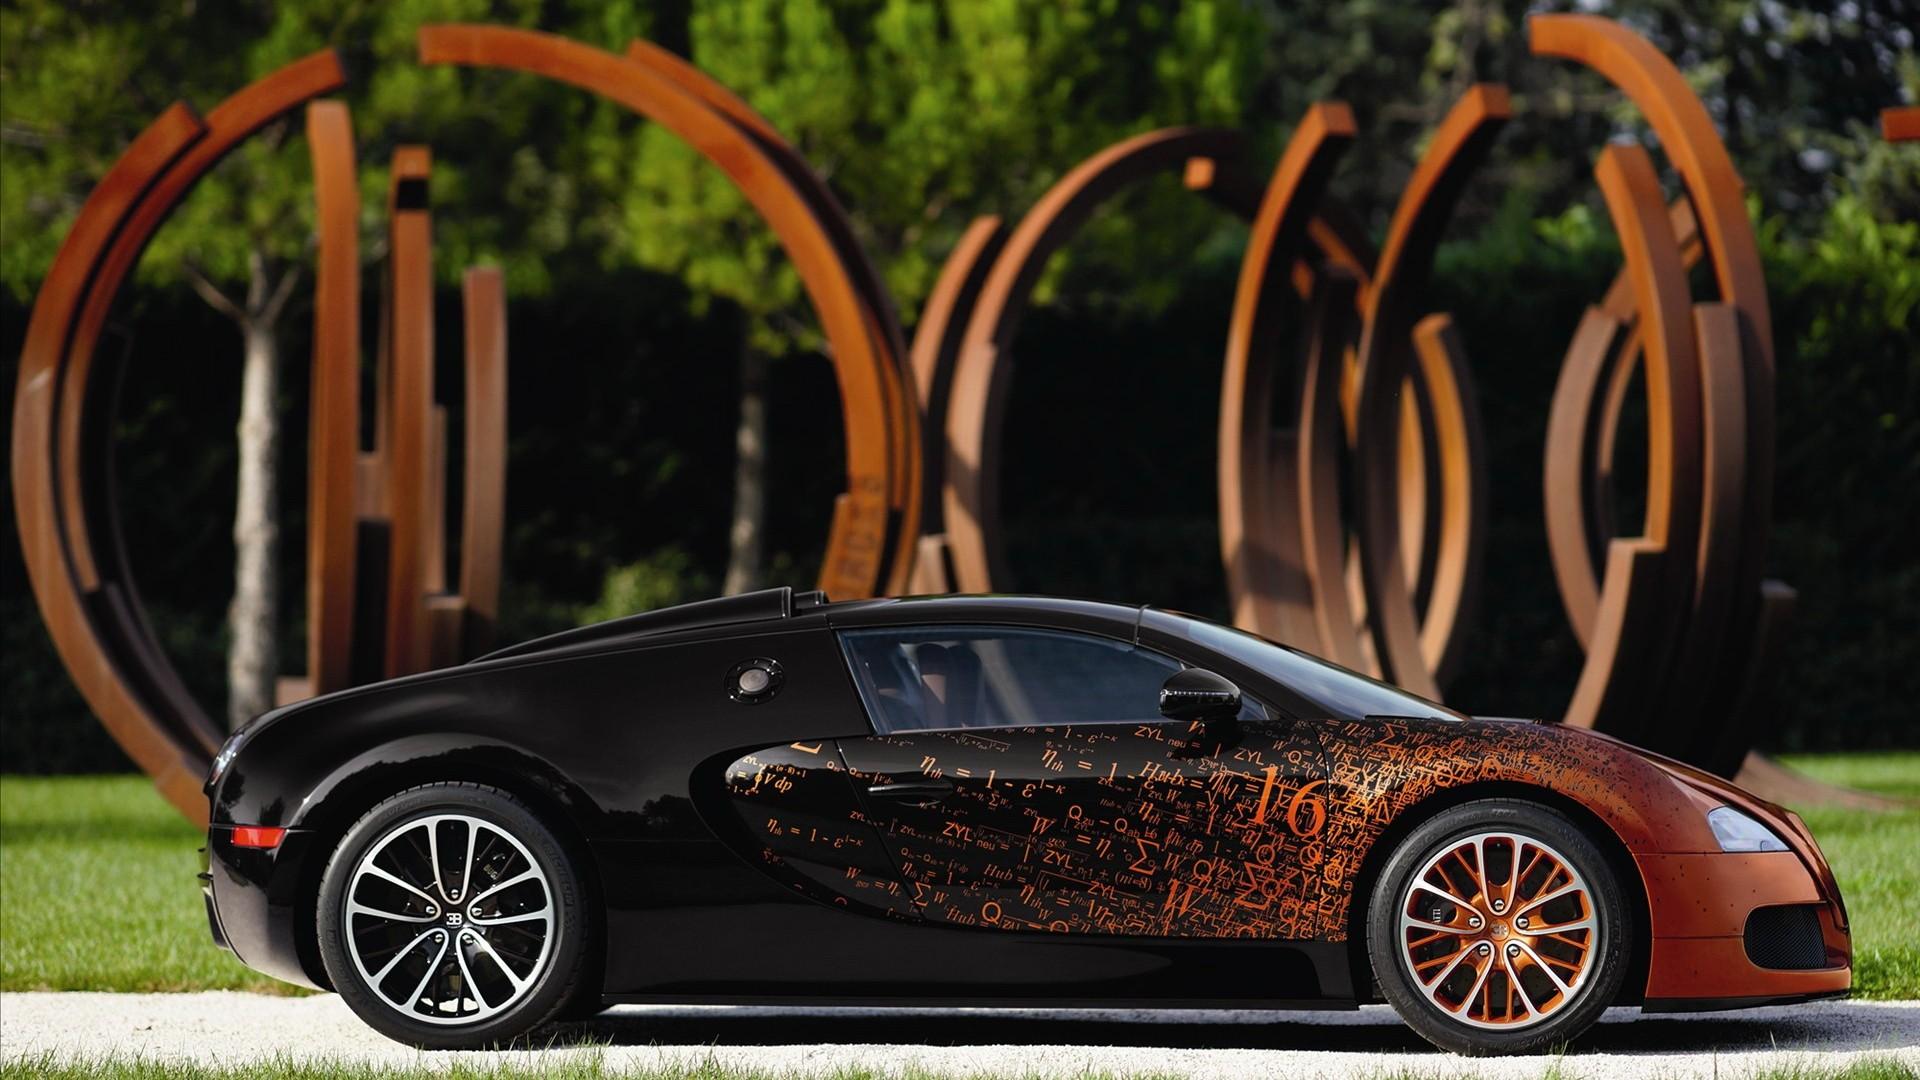 Bugatti Veyron Wallpaper Hd For Laptop - Bernar Venet Bugatti , HD Wallpaper & Backgrounds